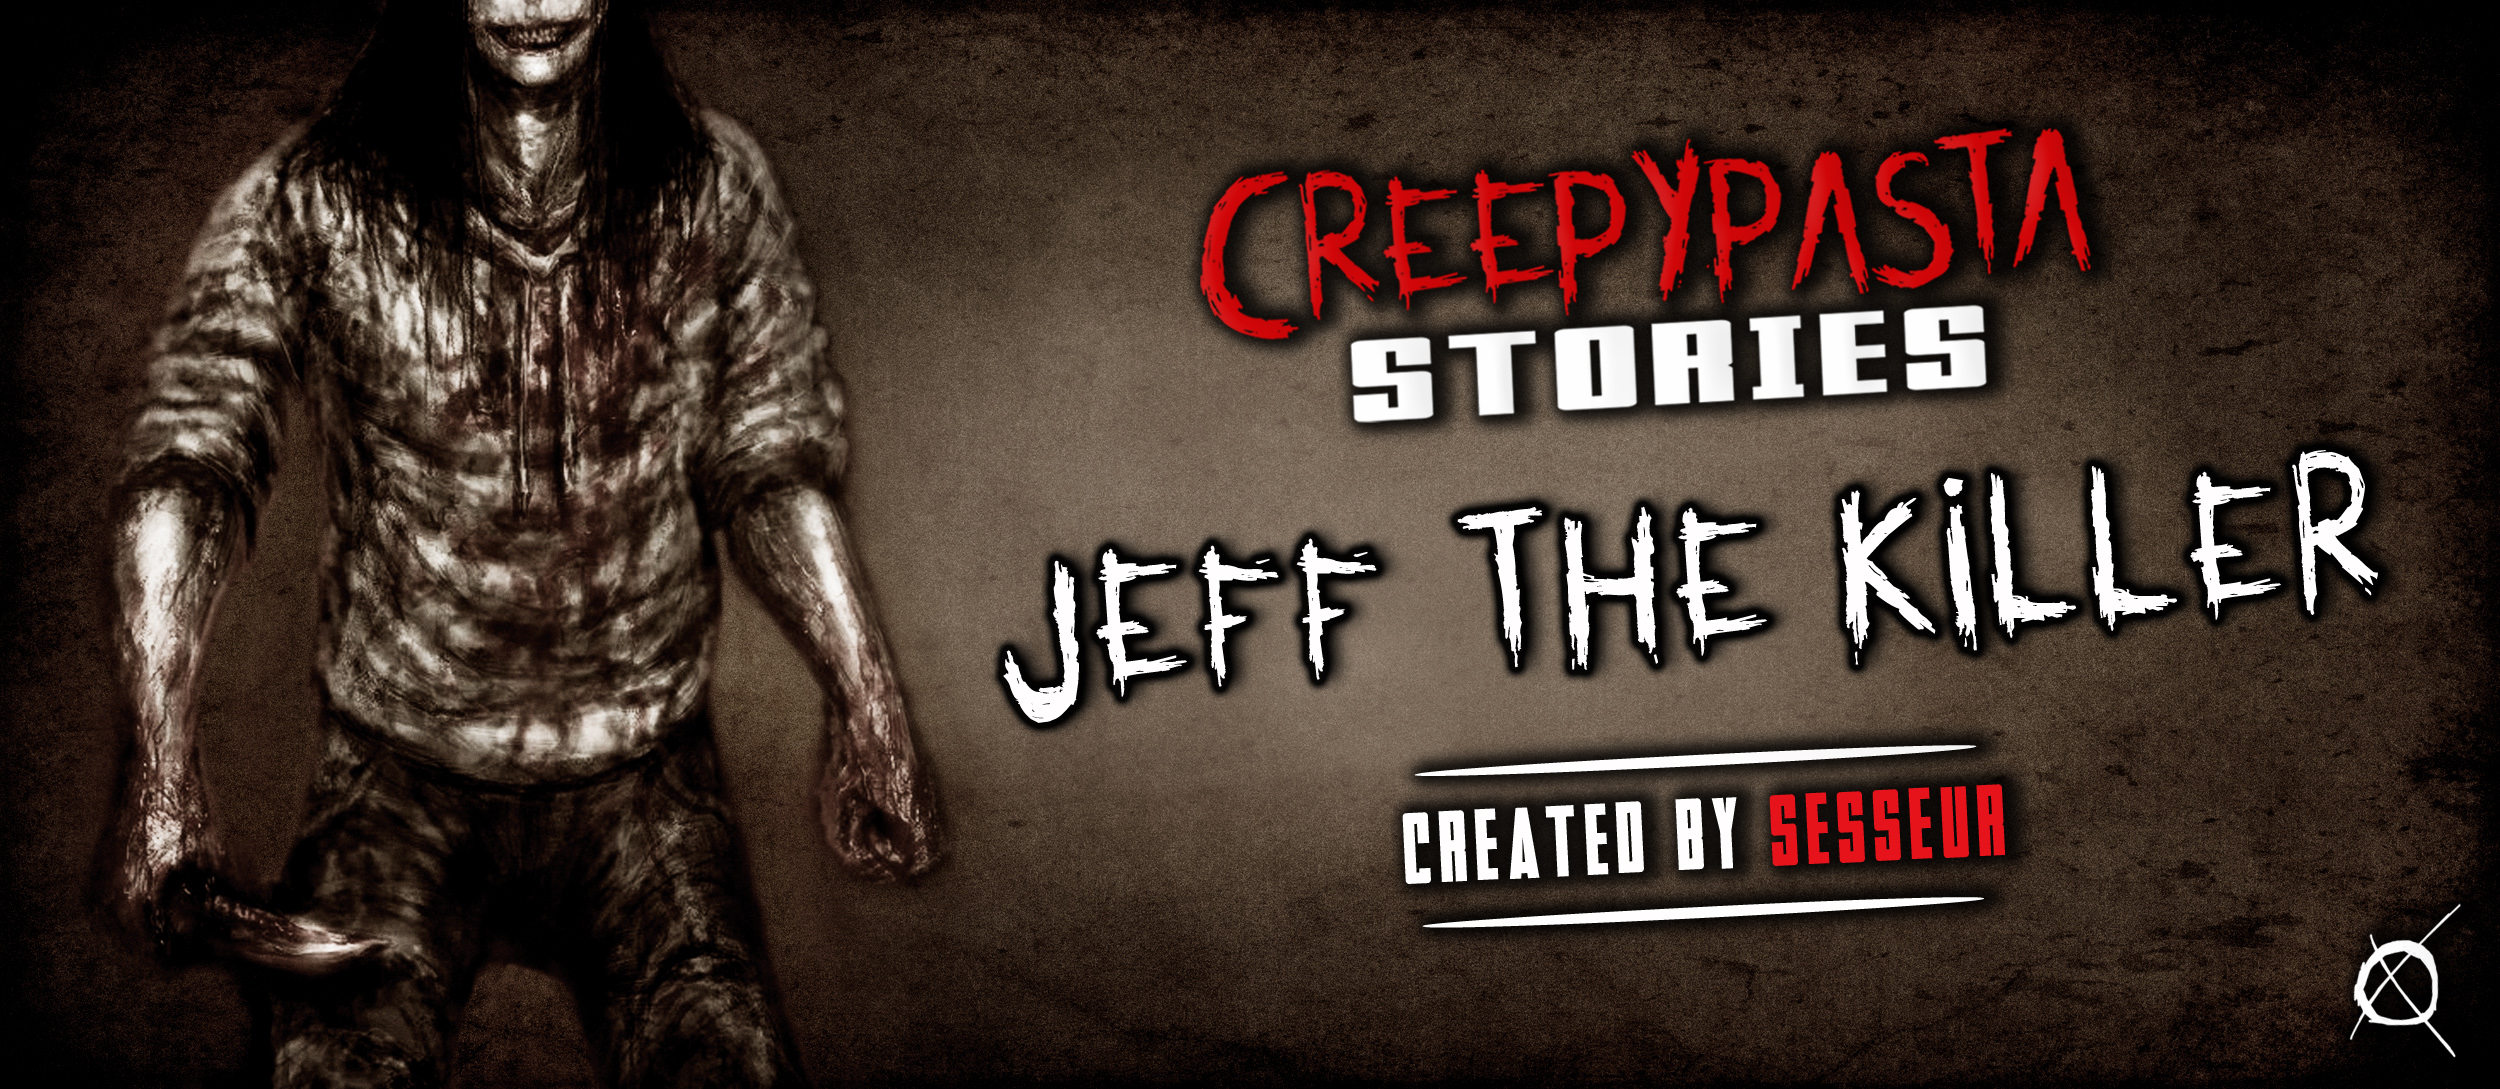 Jeff The Killer - Creepypasta Image Origins, Jeff the Killer